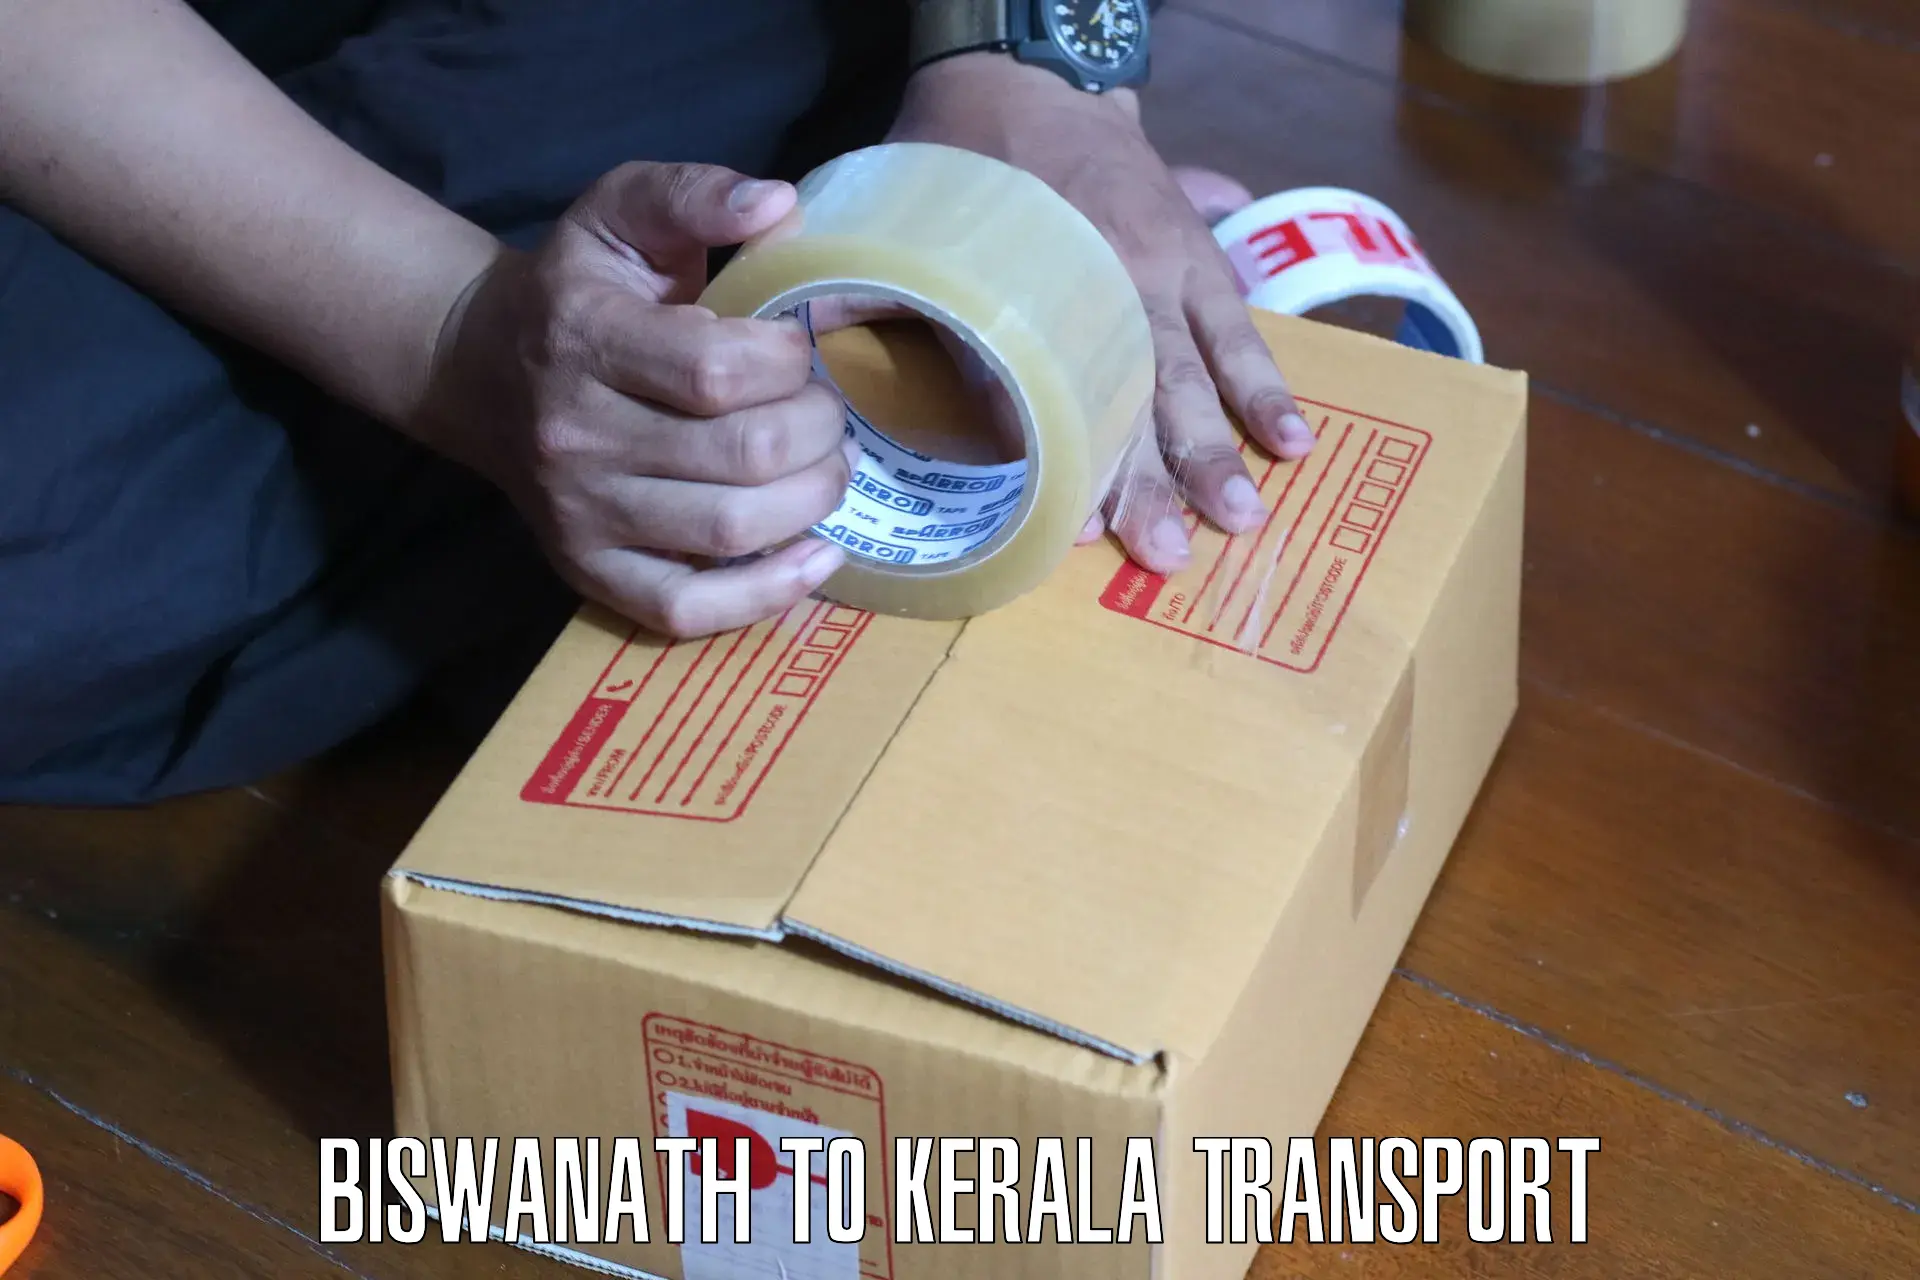 Shipping partner Biswanath to Kuttiady